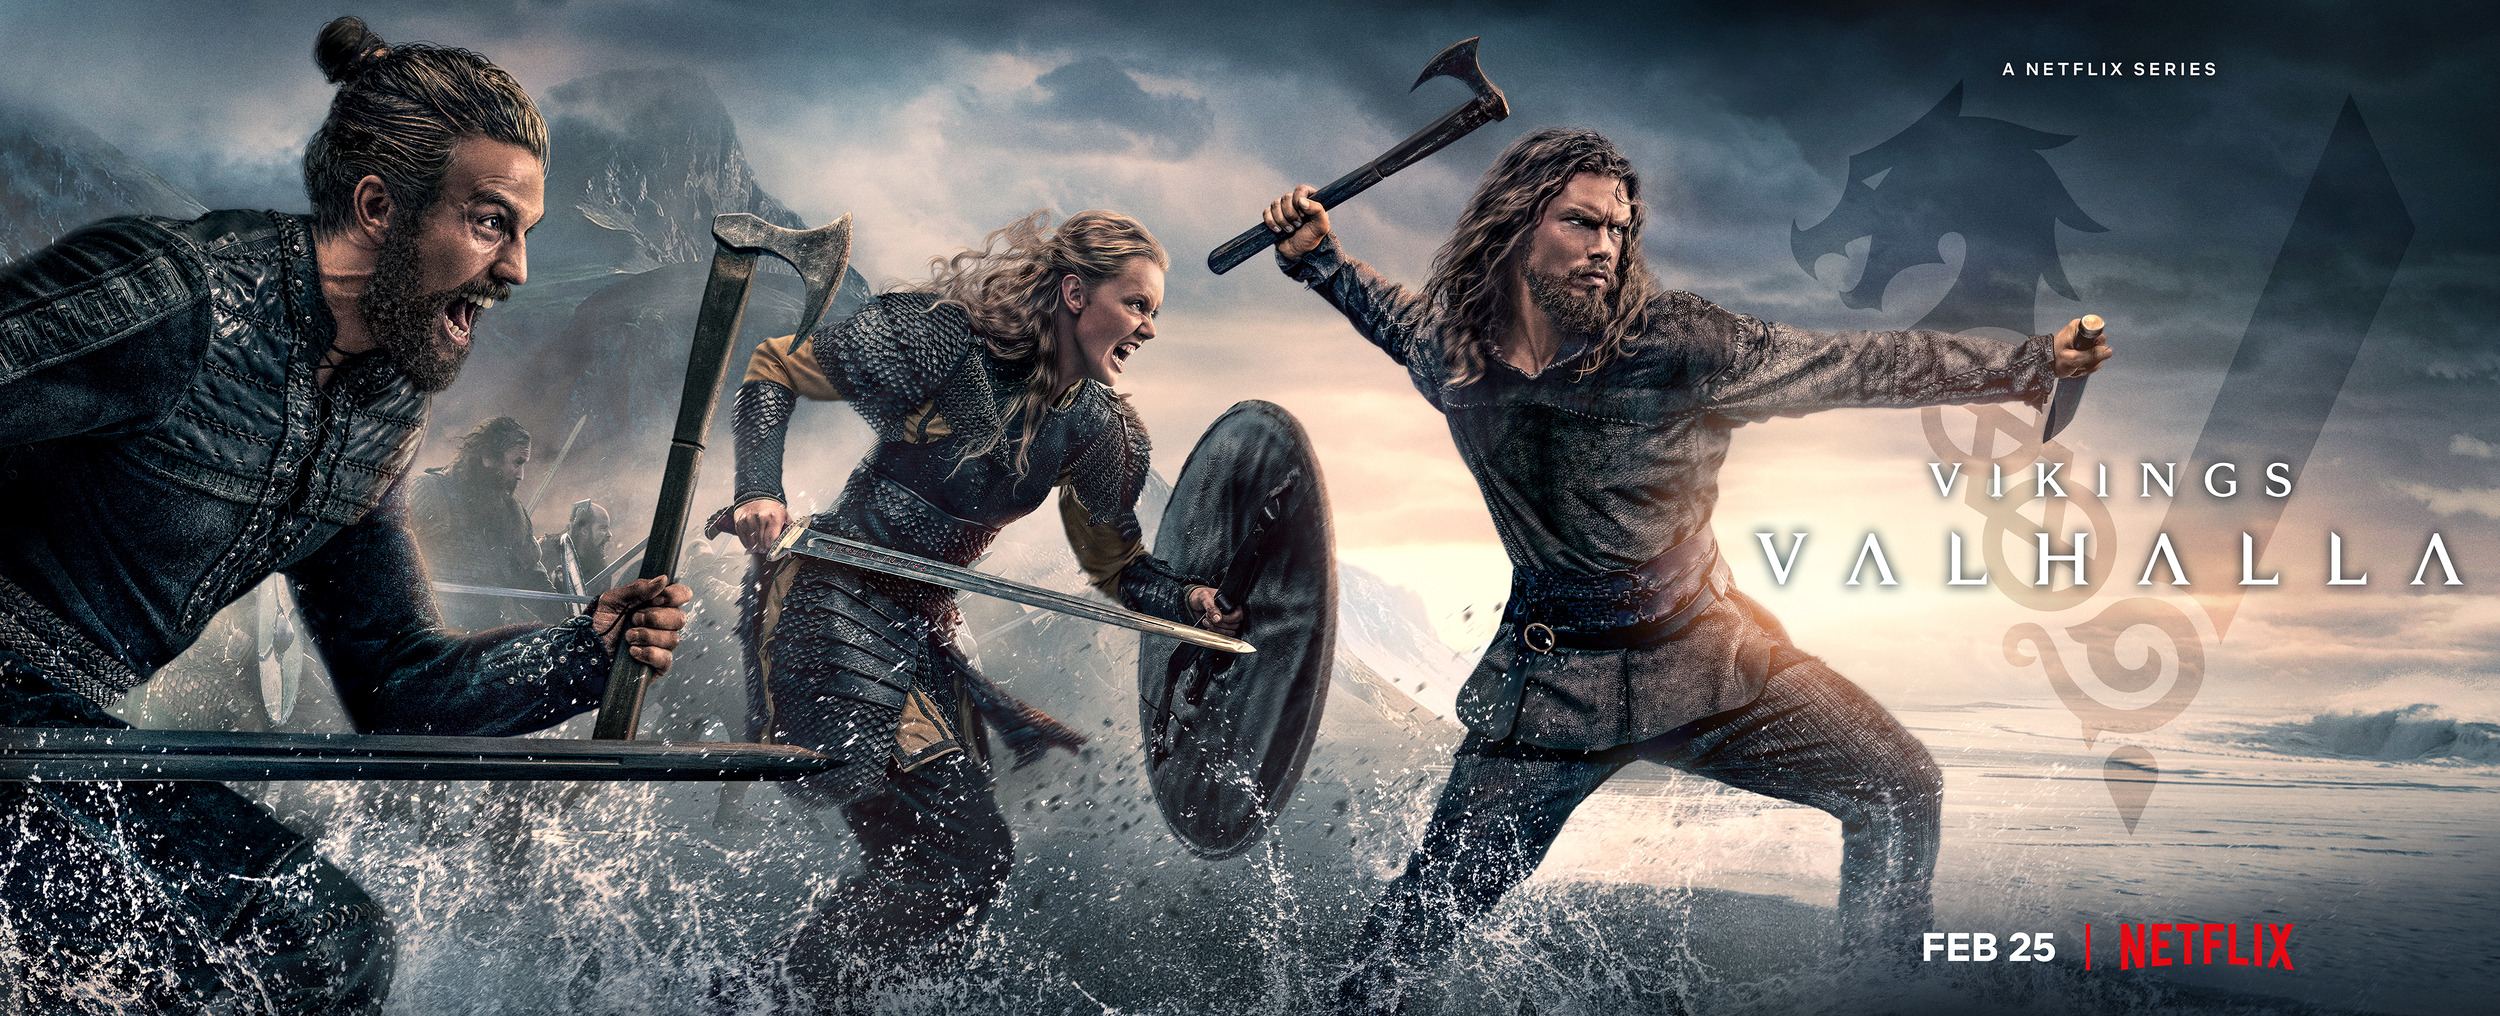 Mega Sized TV Poster Image for Vikings: Valhalla (#6 of 18)